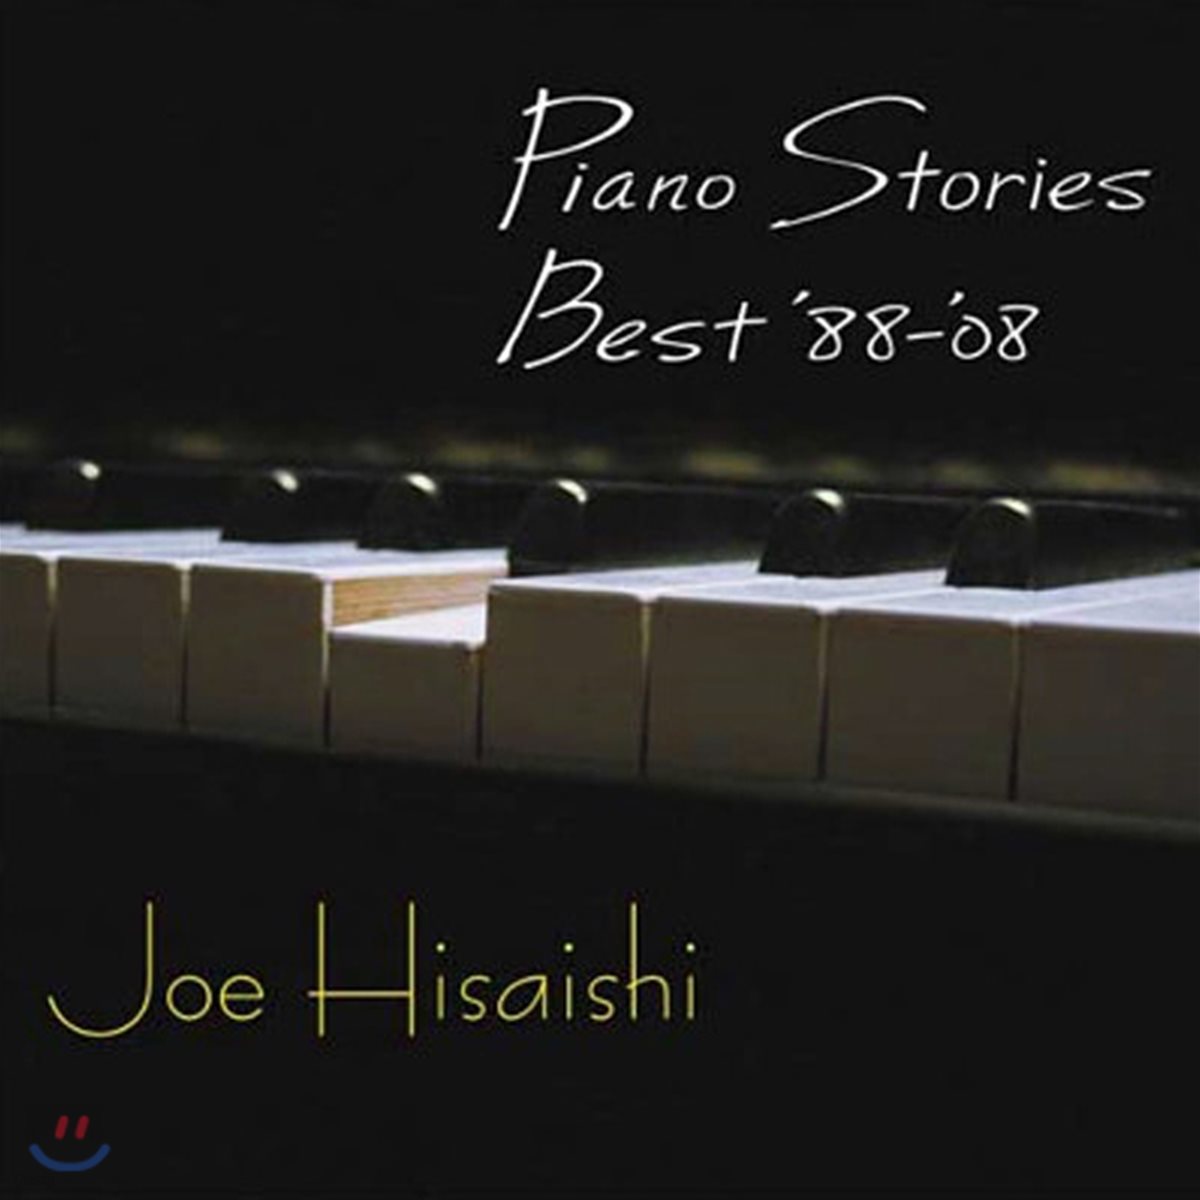 Hisaishi Joe (히사이시 조) - Piano Stories Best '88-'08 [2LP]